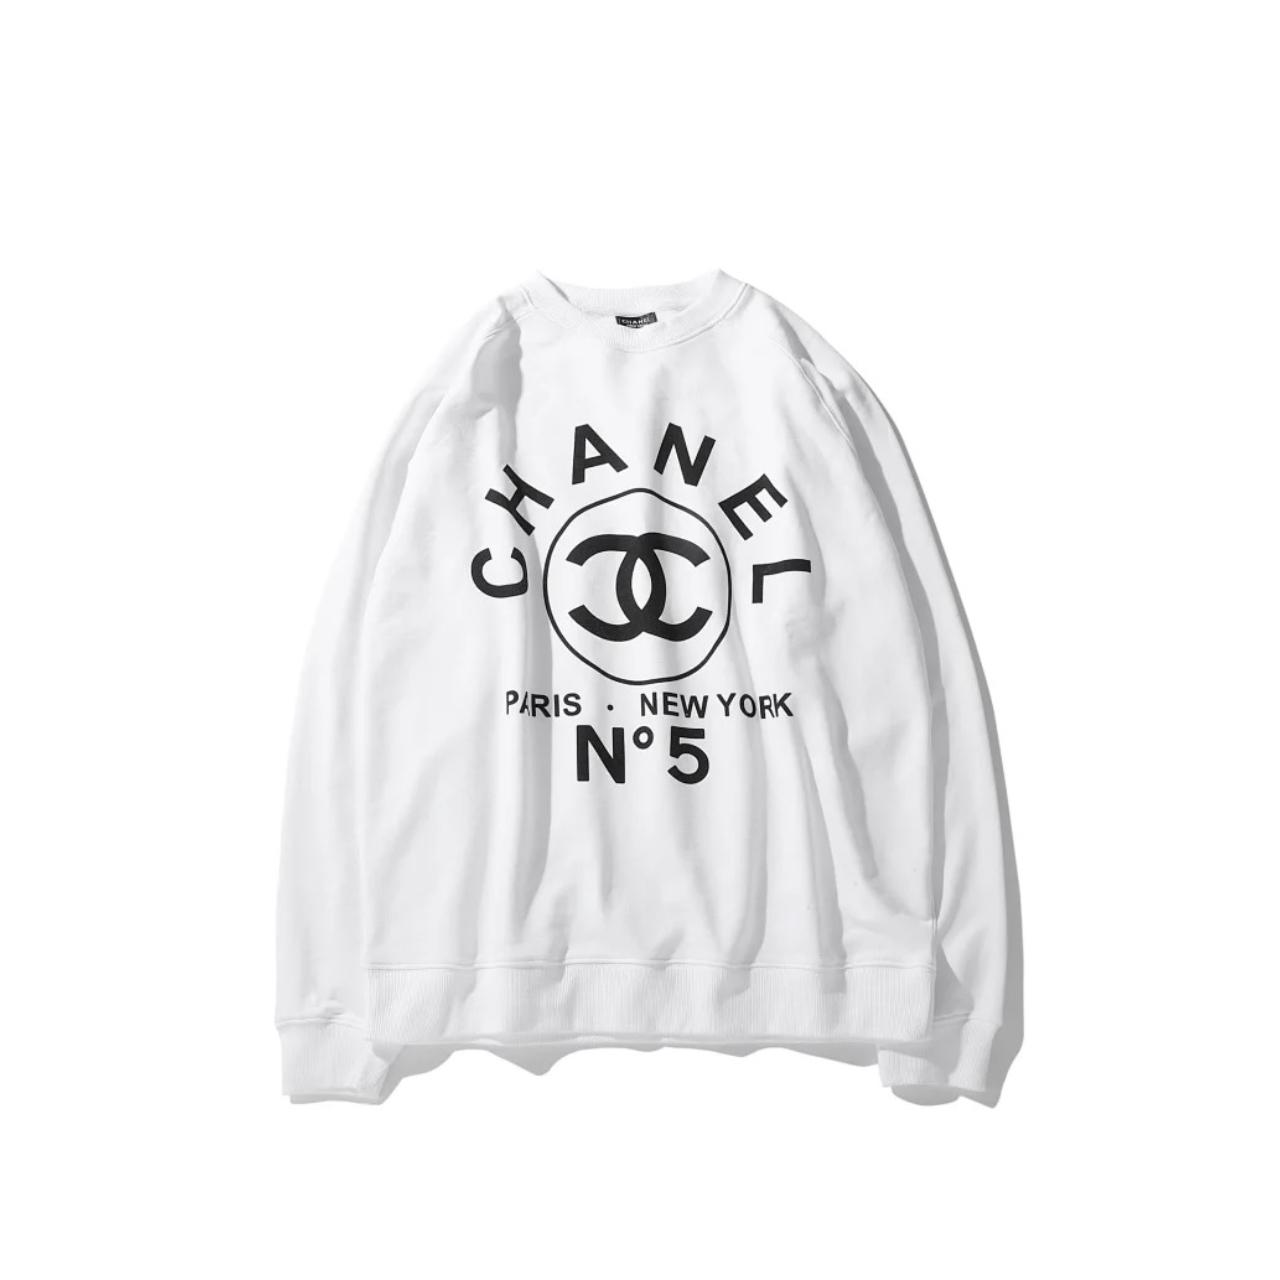 Chanel Men's White and Black Sweatshirt | Depop